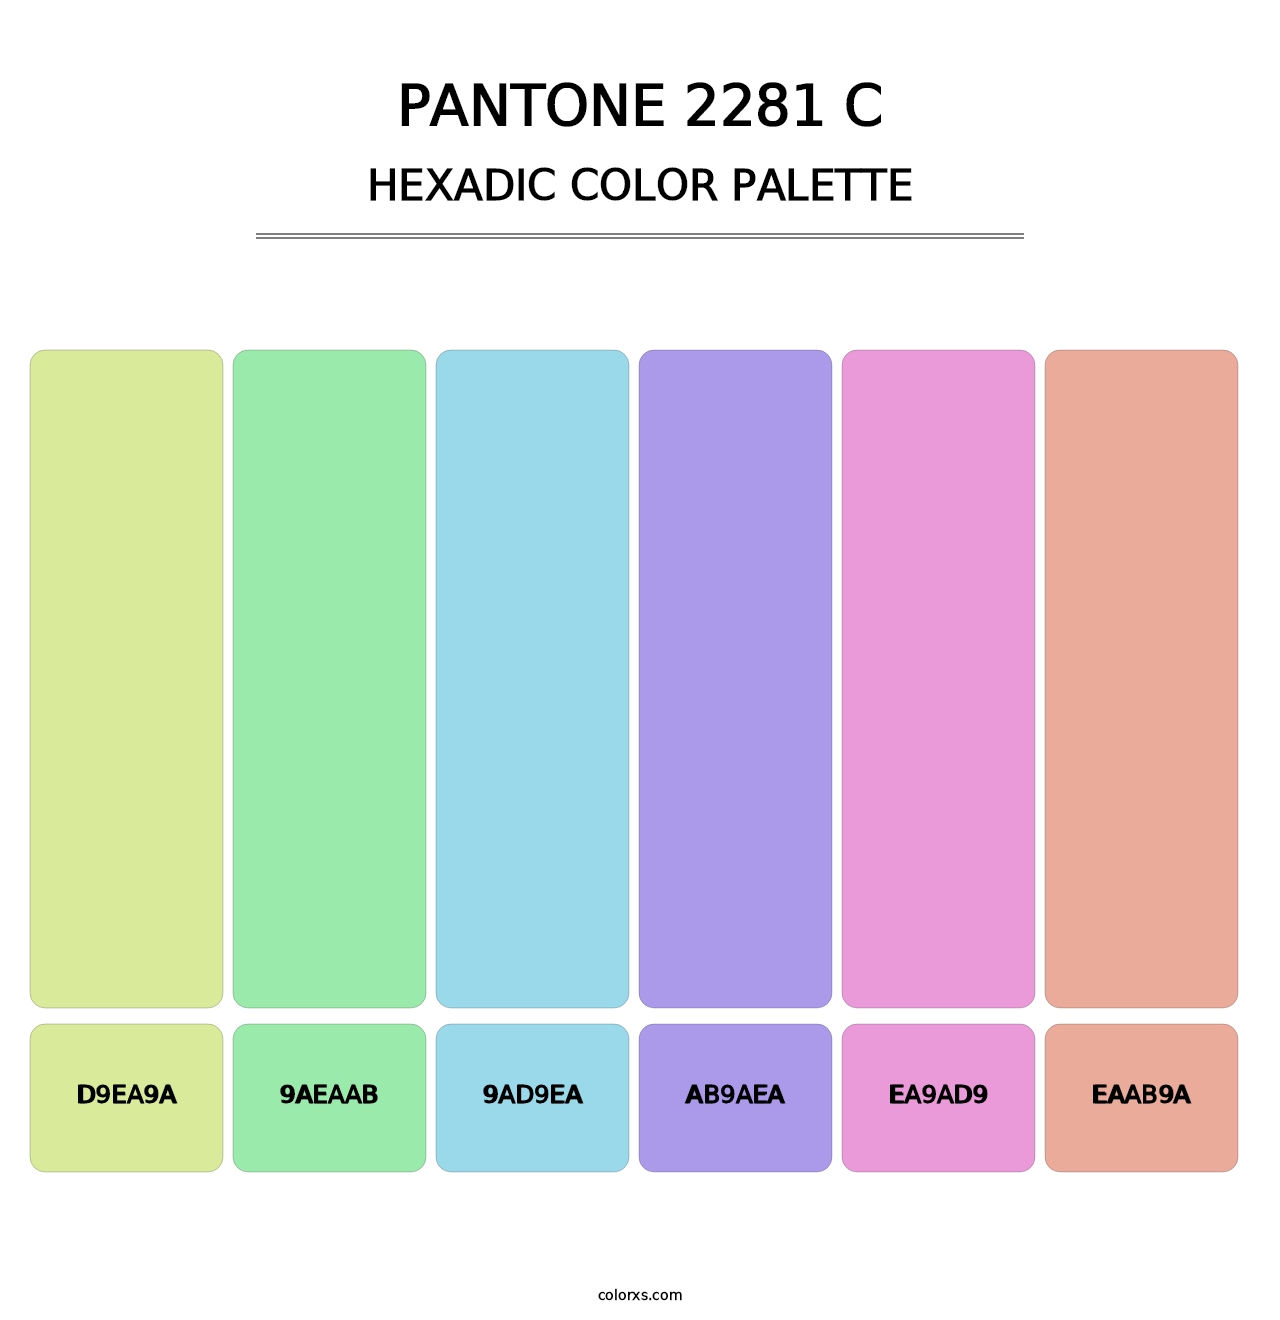 PANTONE 2281 C - Hexadic Color Palette